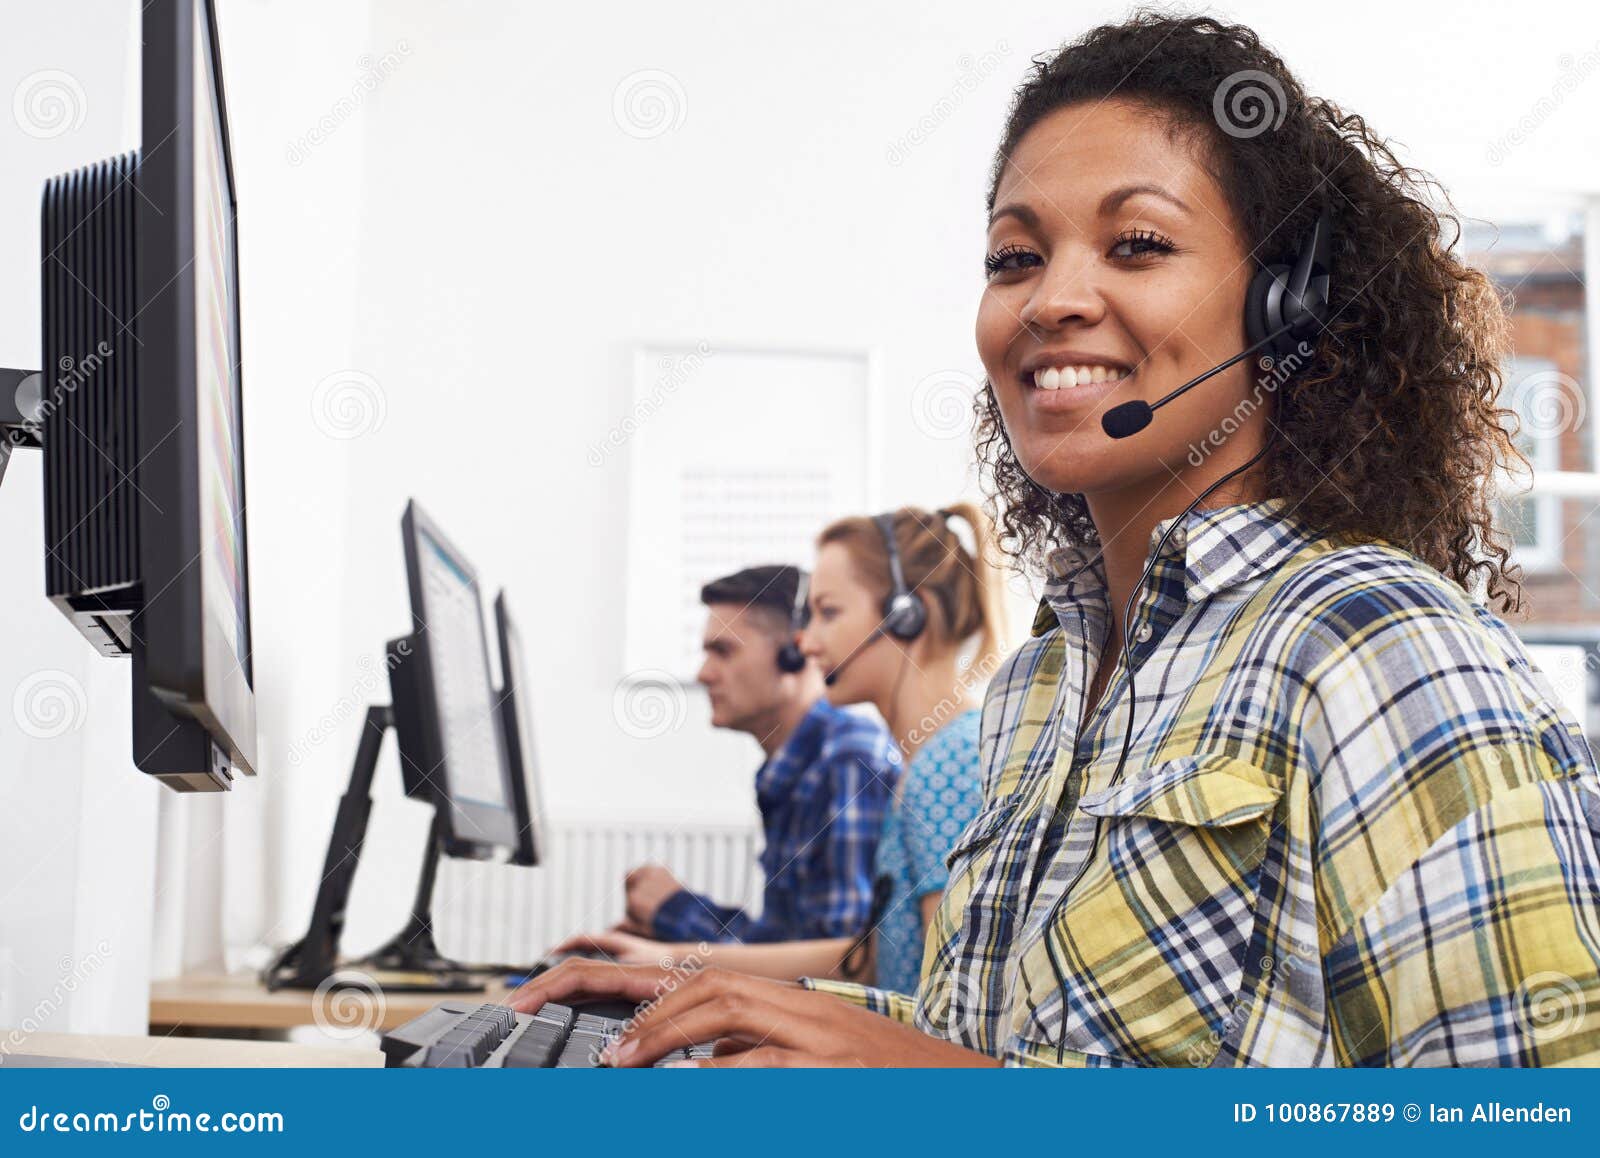 female customer services agent in call centre